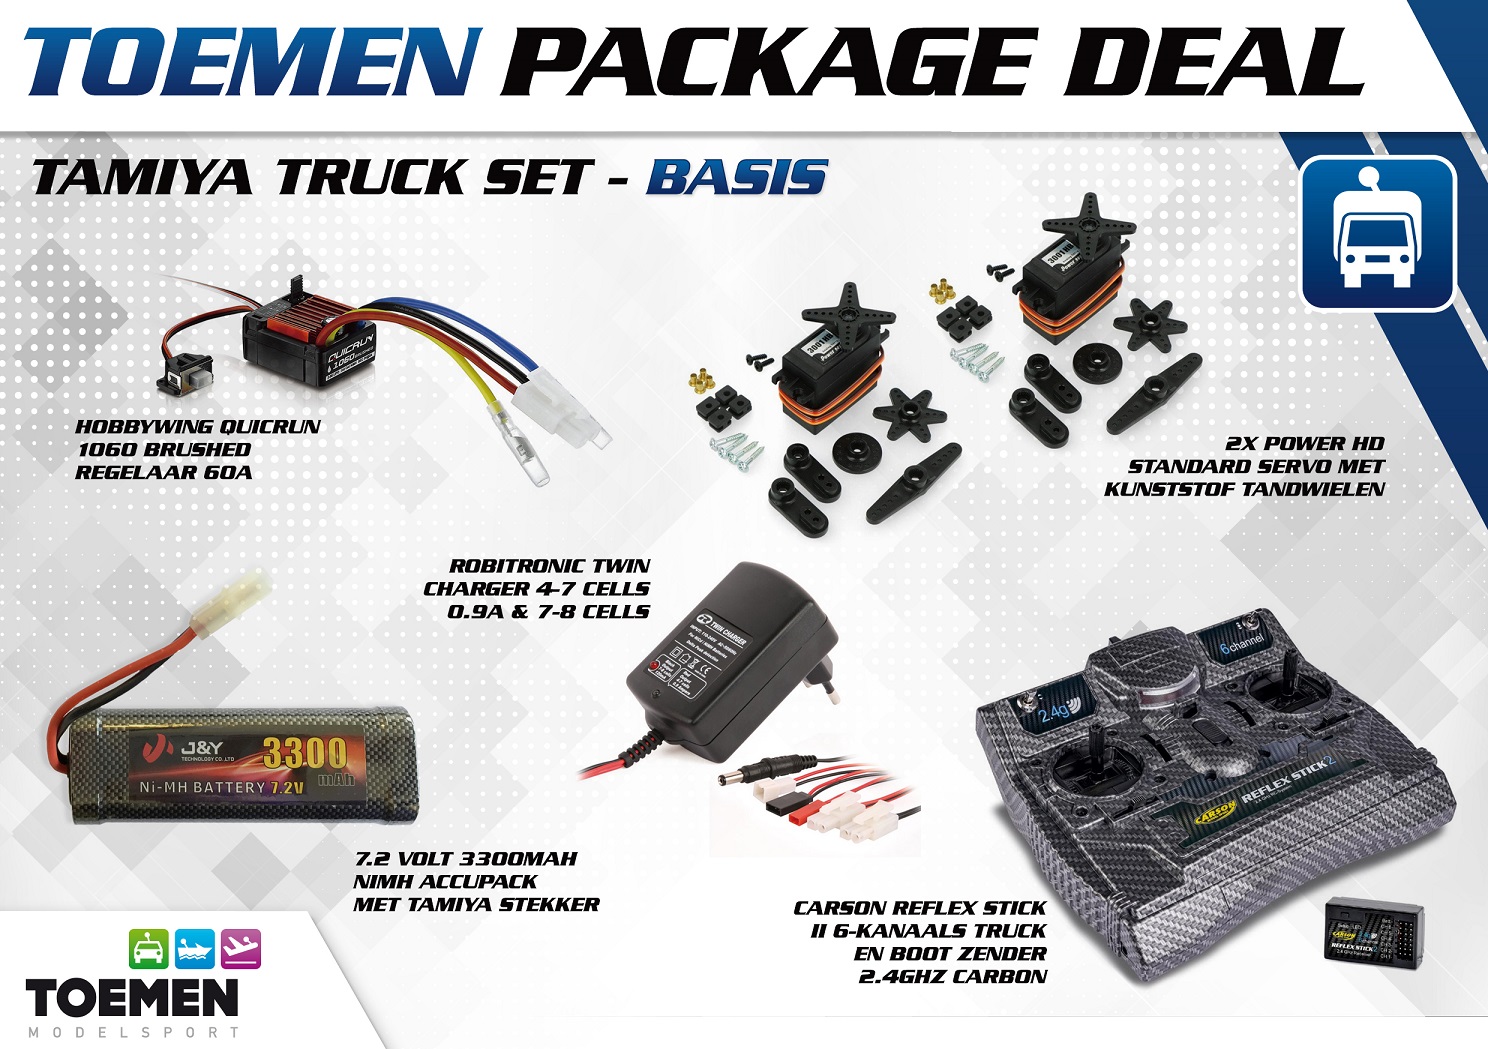 Toemen Package Deal Tamiya Truck Set - Basis